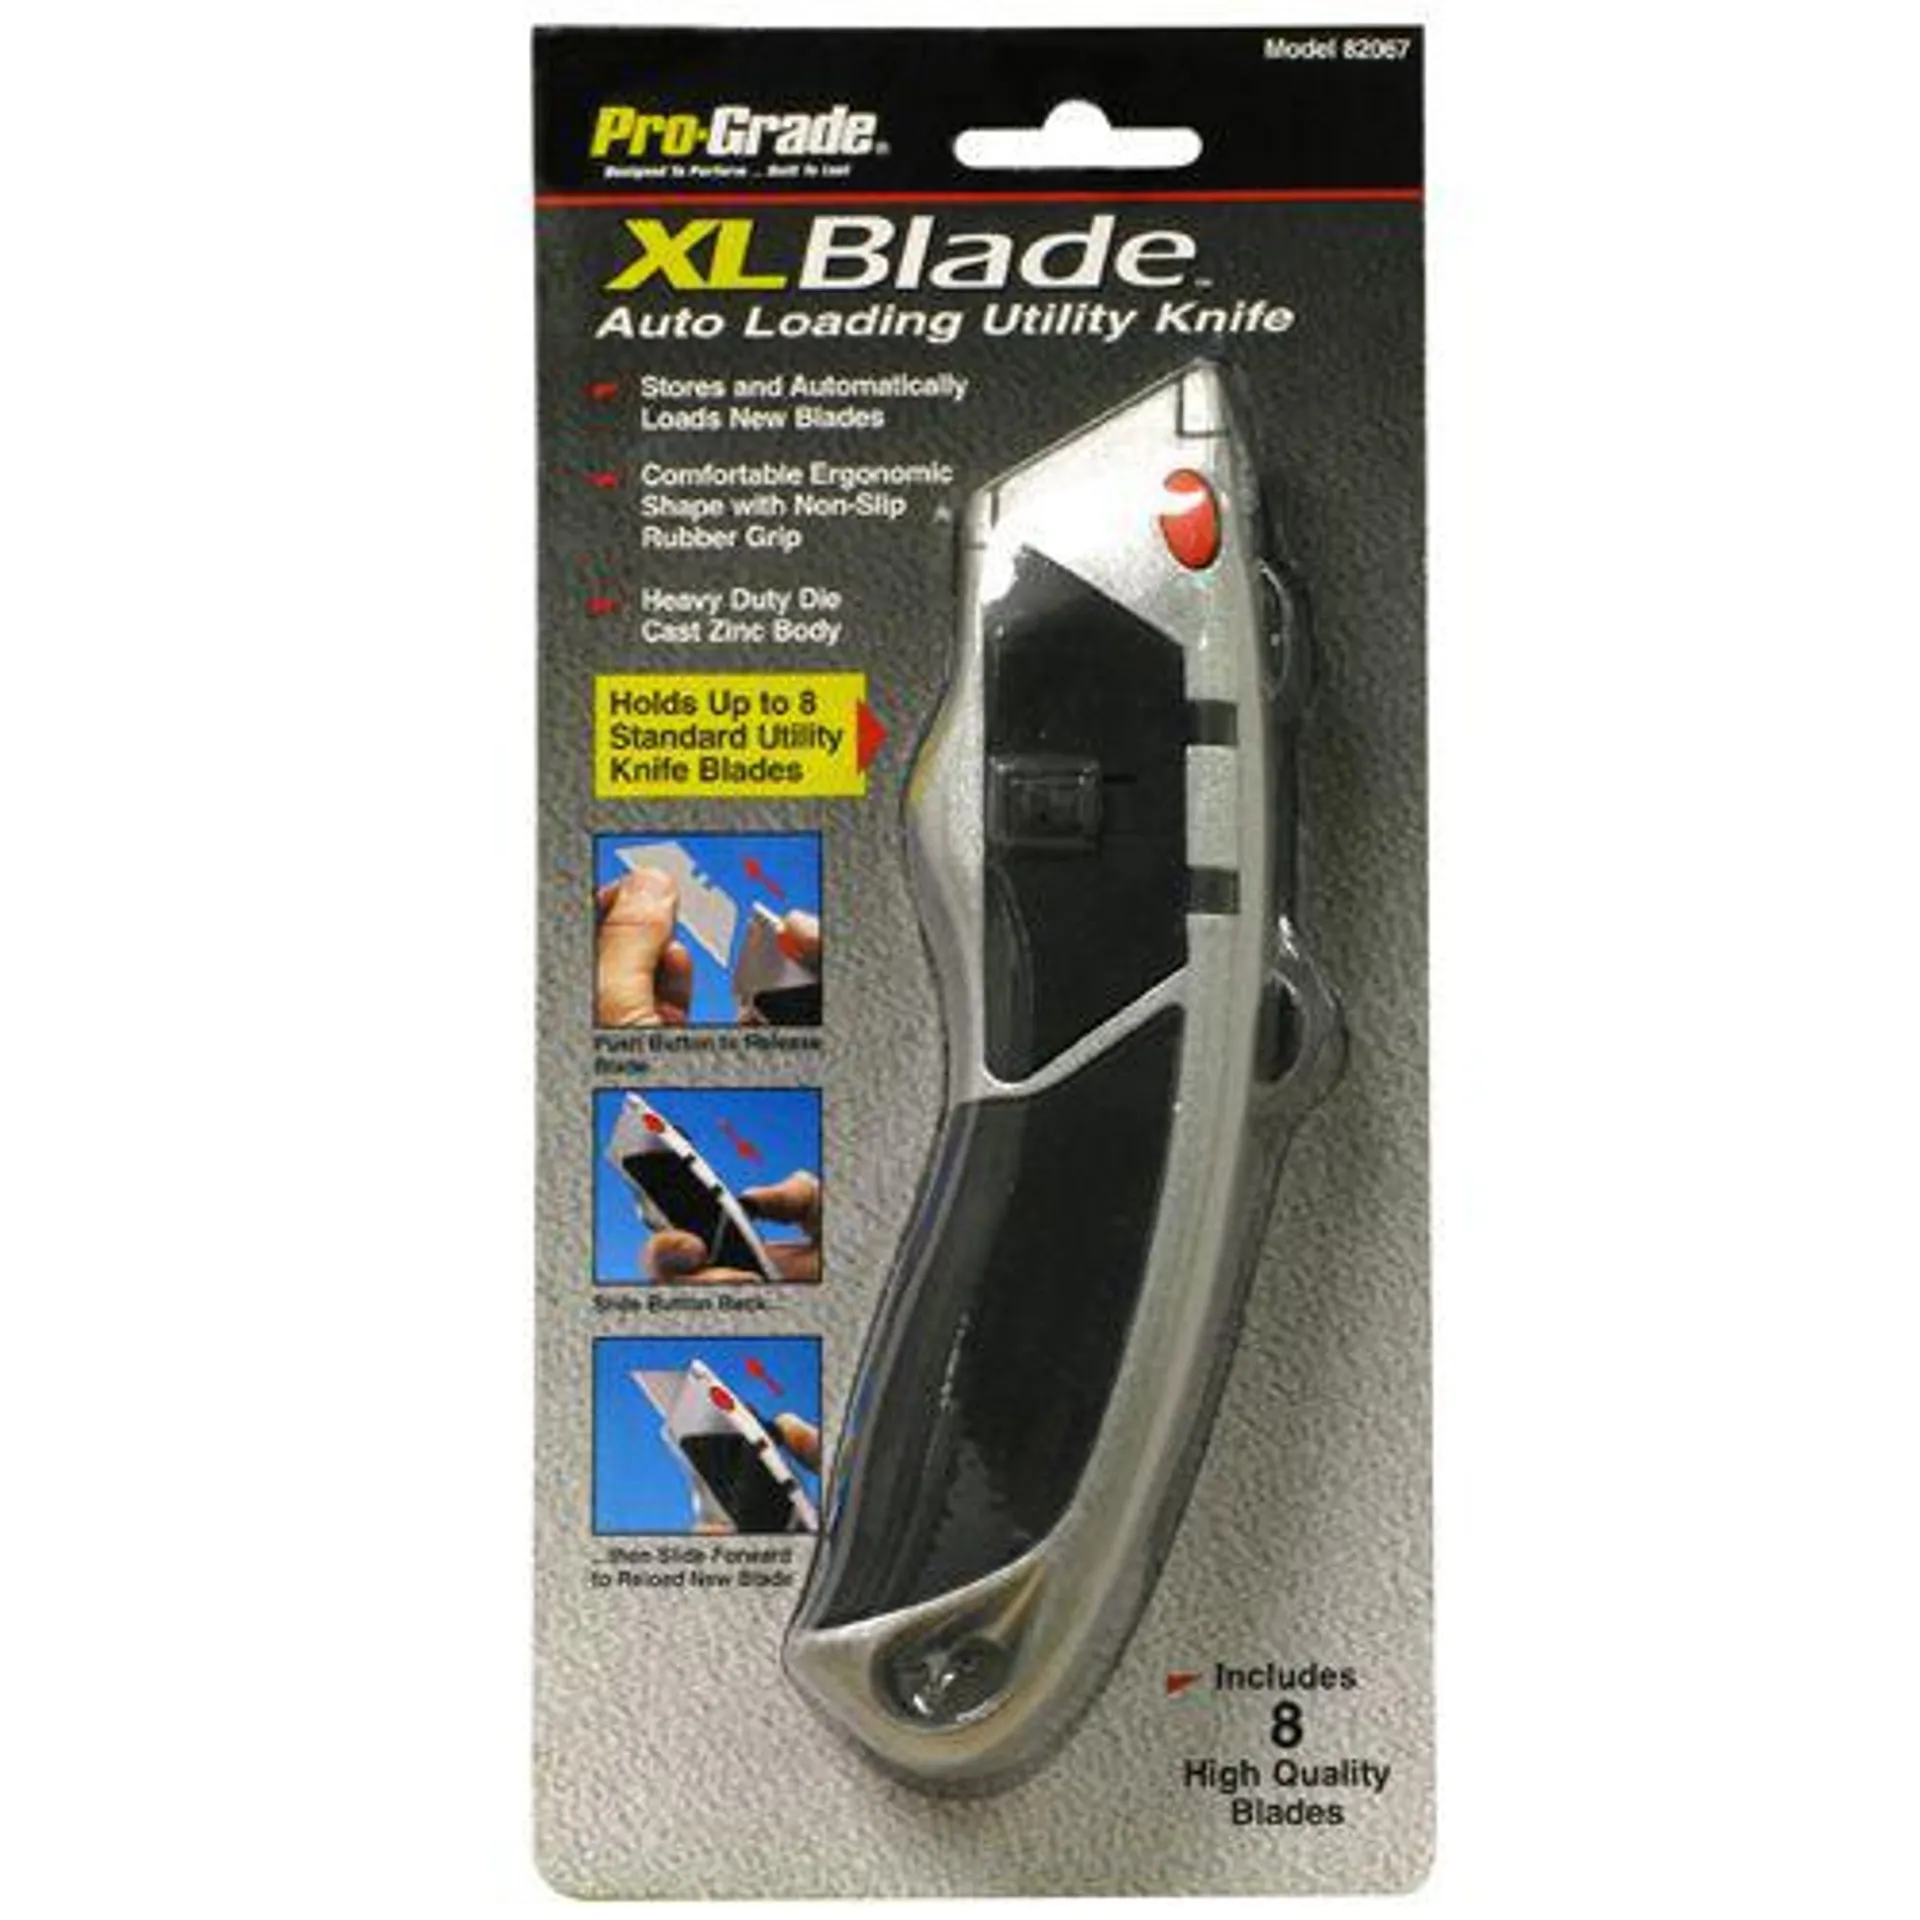 XL Blade™ Auto Loading Utility Knife